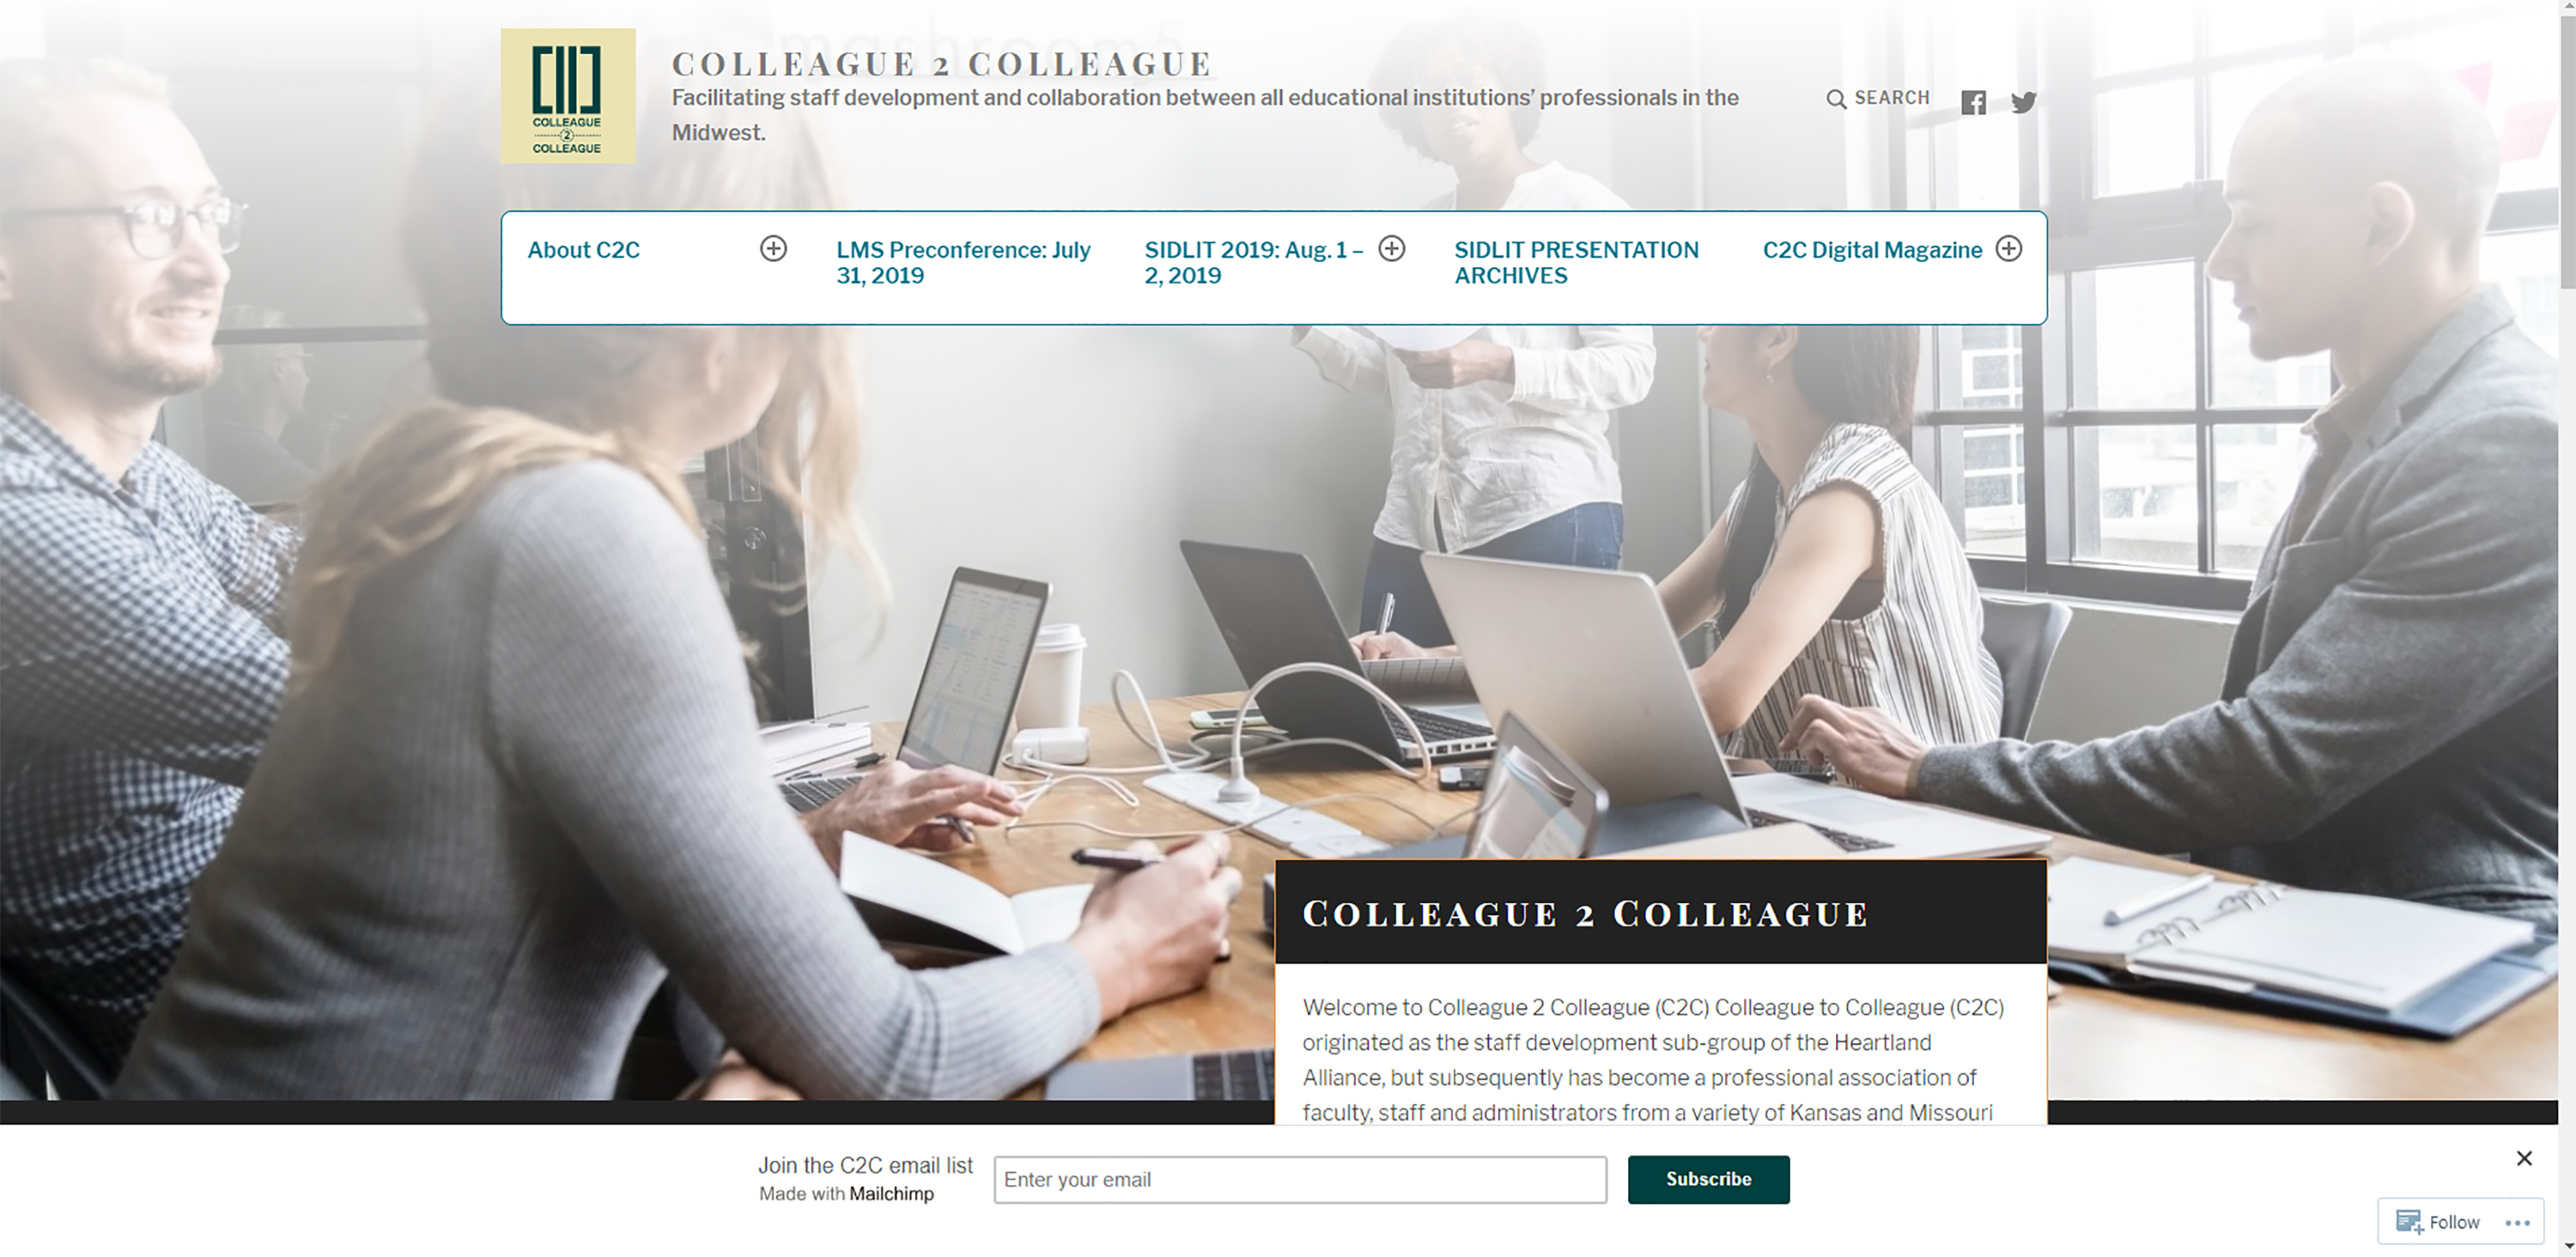 COLLEAGUE 2 COLLEAGUE – Facilitating staff development and